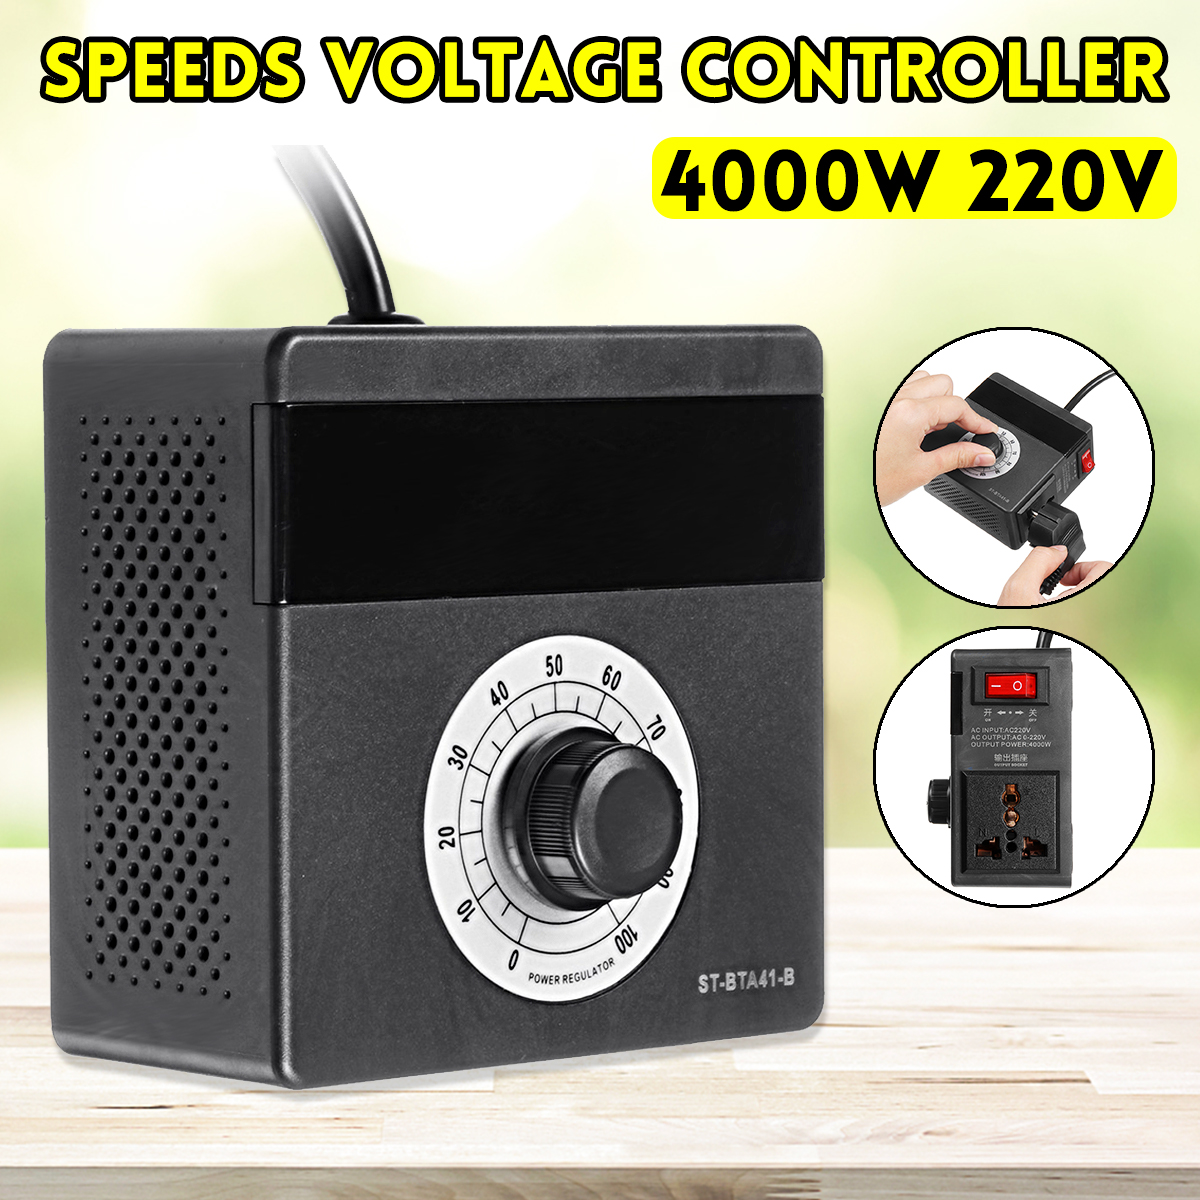 4000W-220V-Speeds-Voltage-Controller-Voltage-Regulation-Speed--Temperature-Adjustment-Voltage-Regula-1817565-1